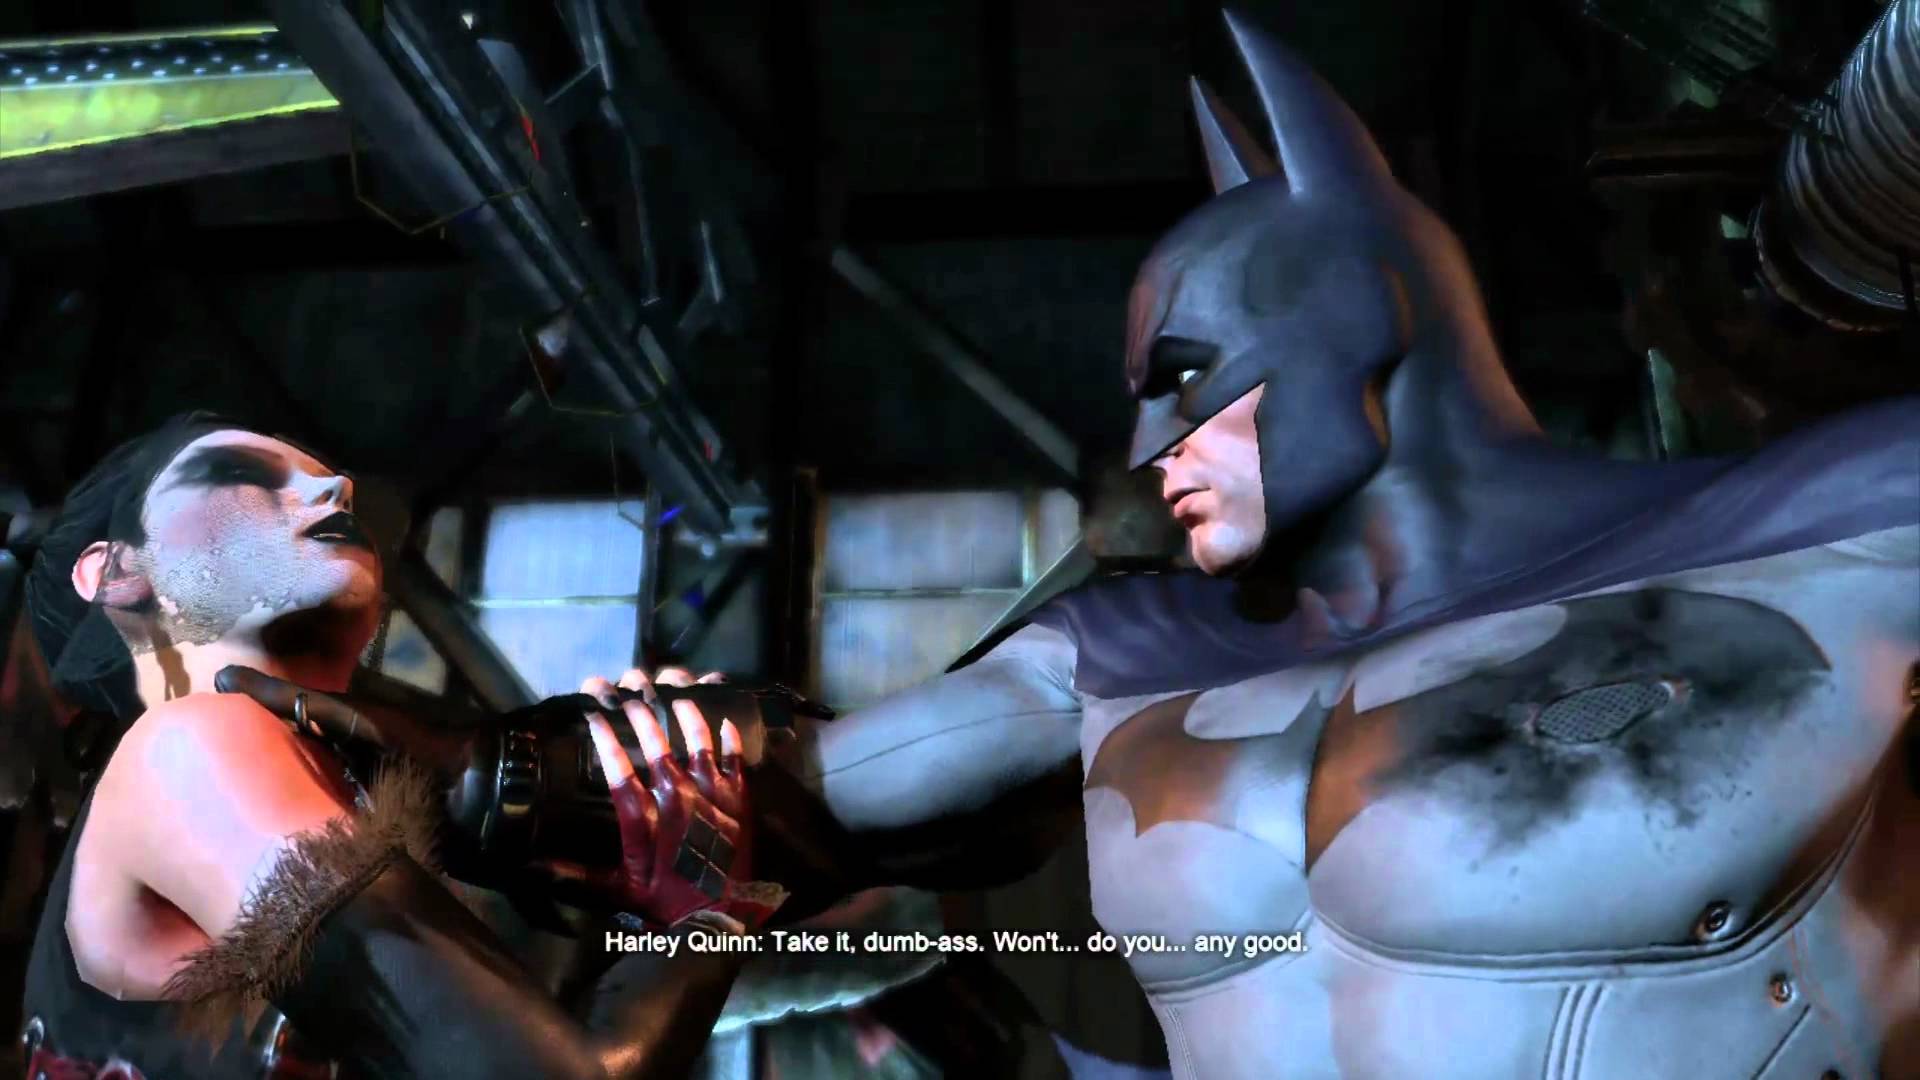 Harley game batman explodes over quinns